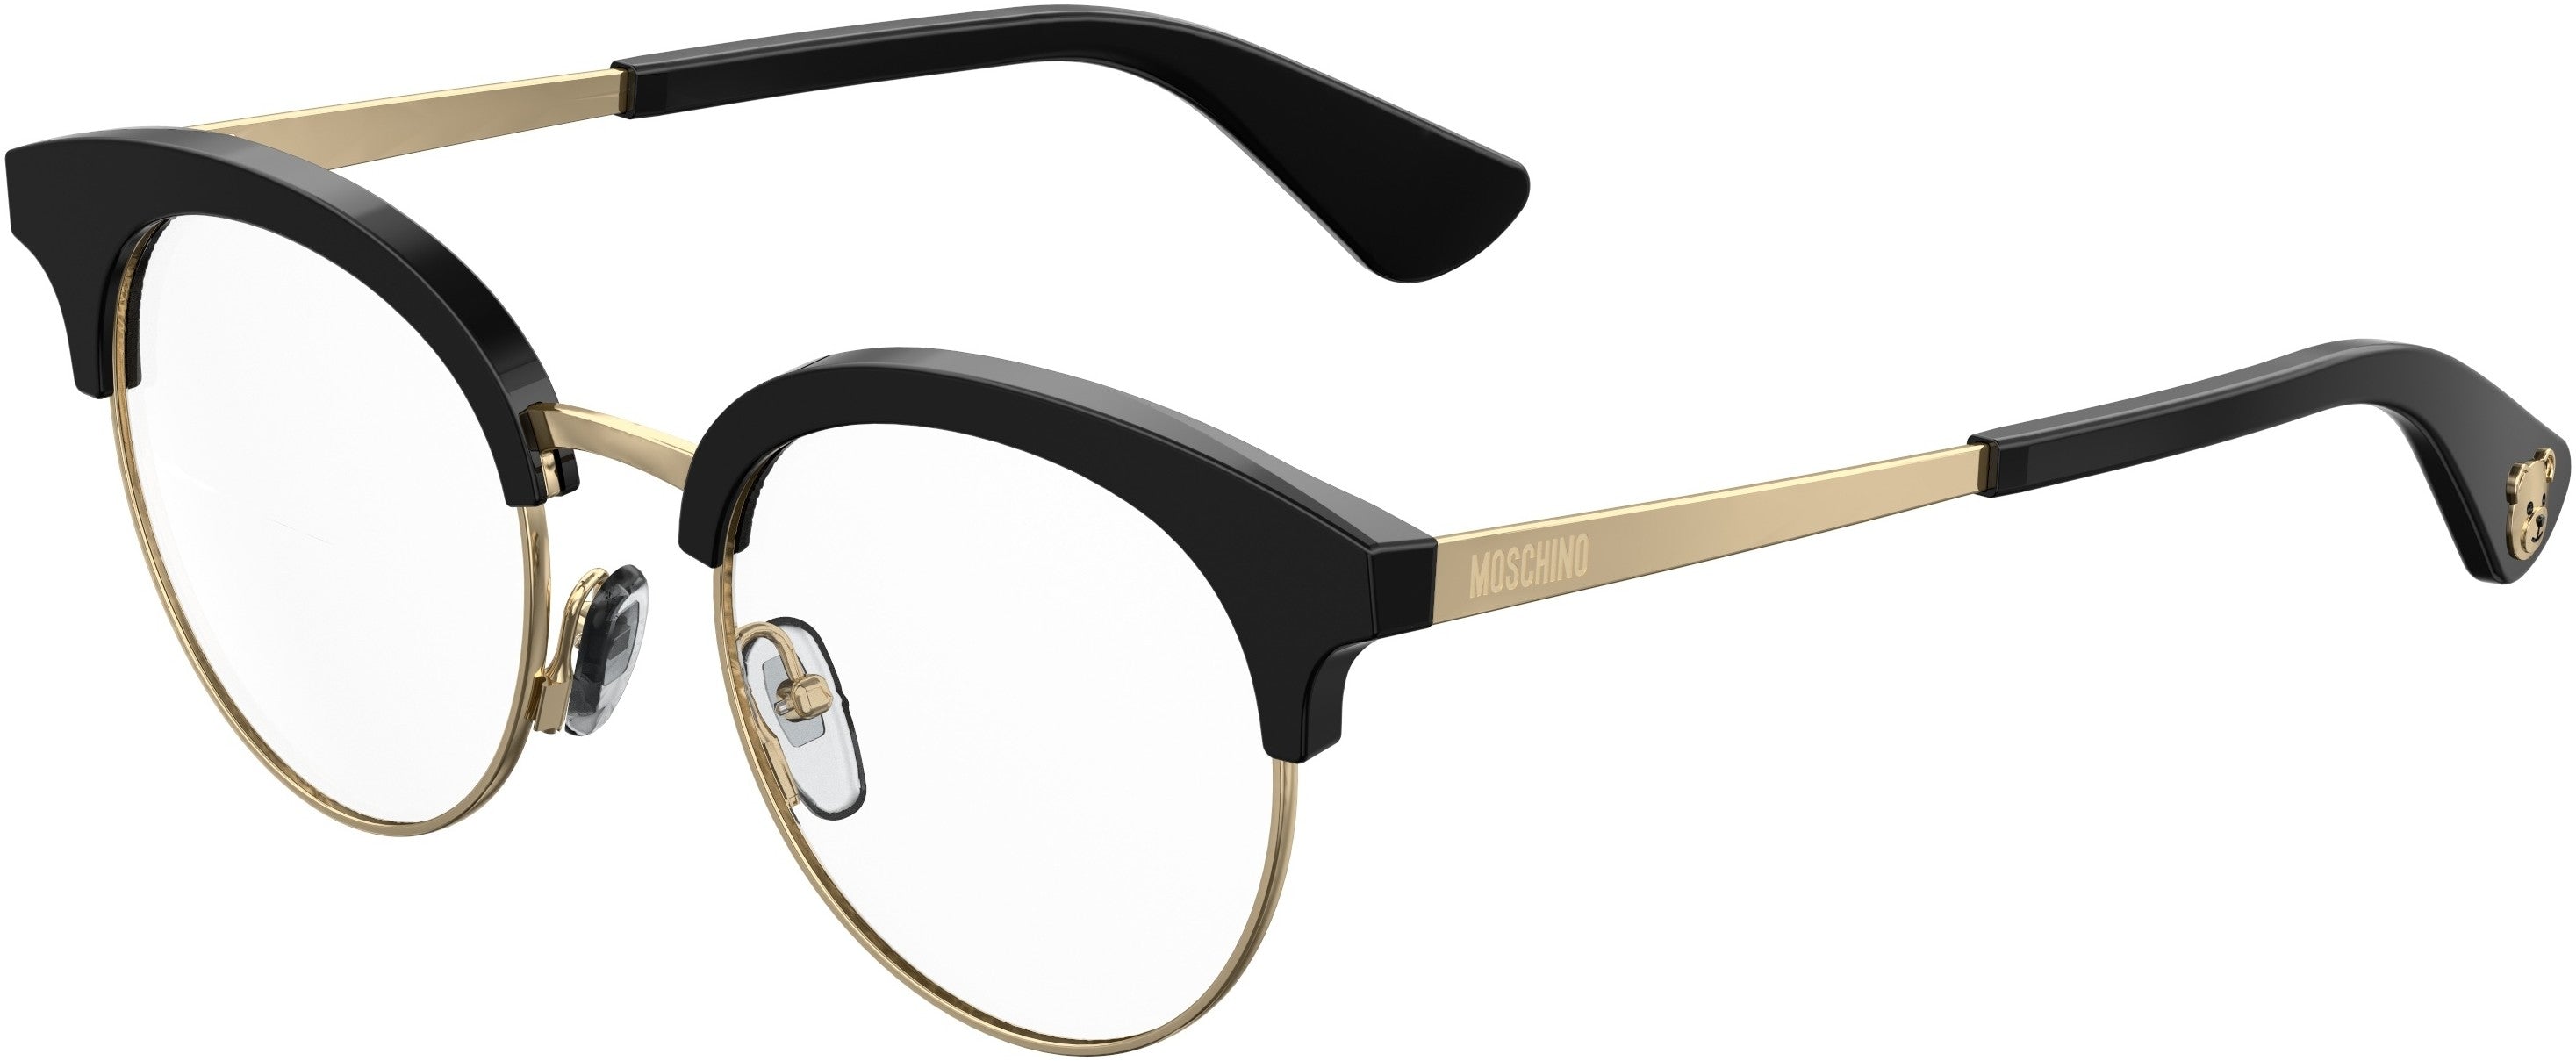  Moschino 514 Oval Modified Eyeglasses 0807-0807  Black (00 Demo Lens)